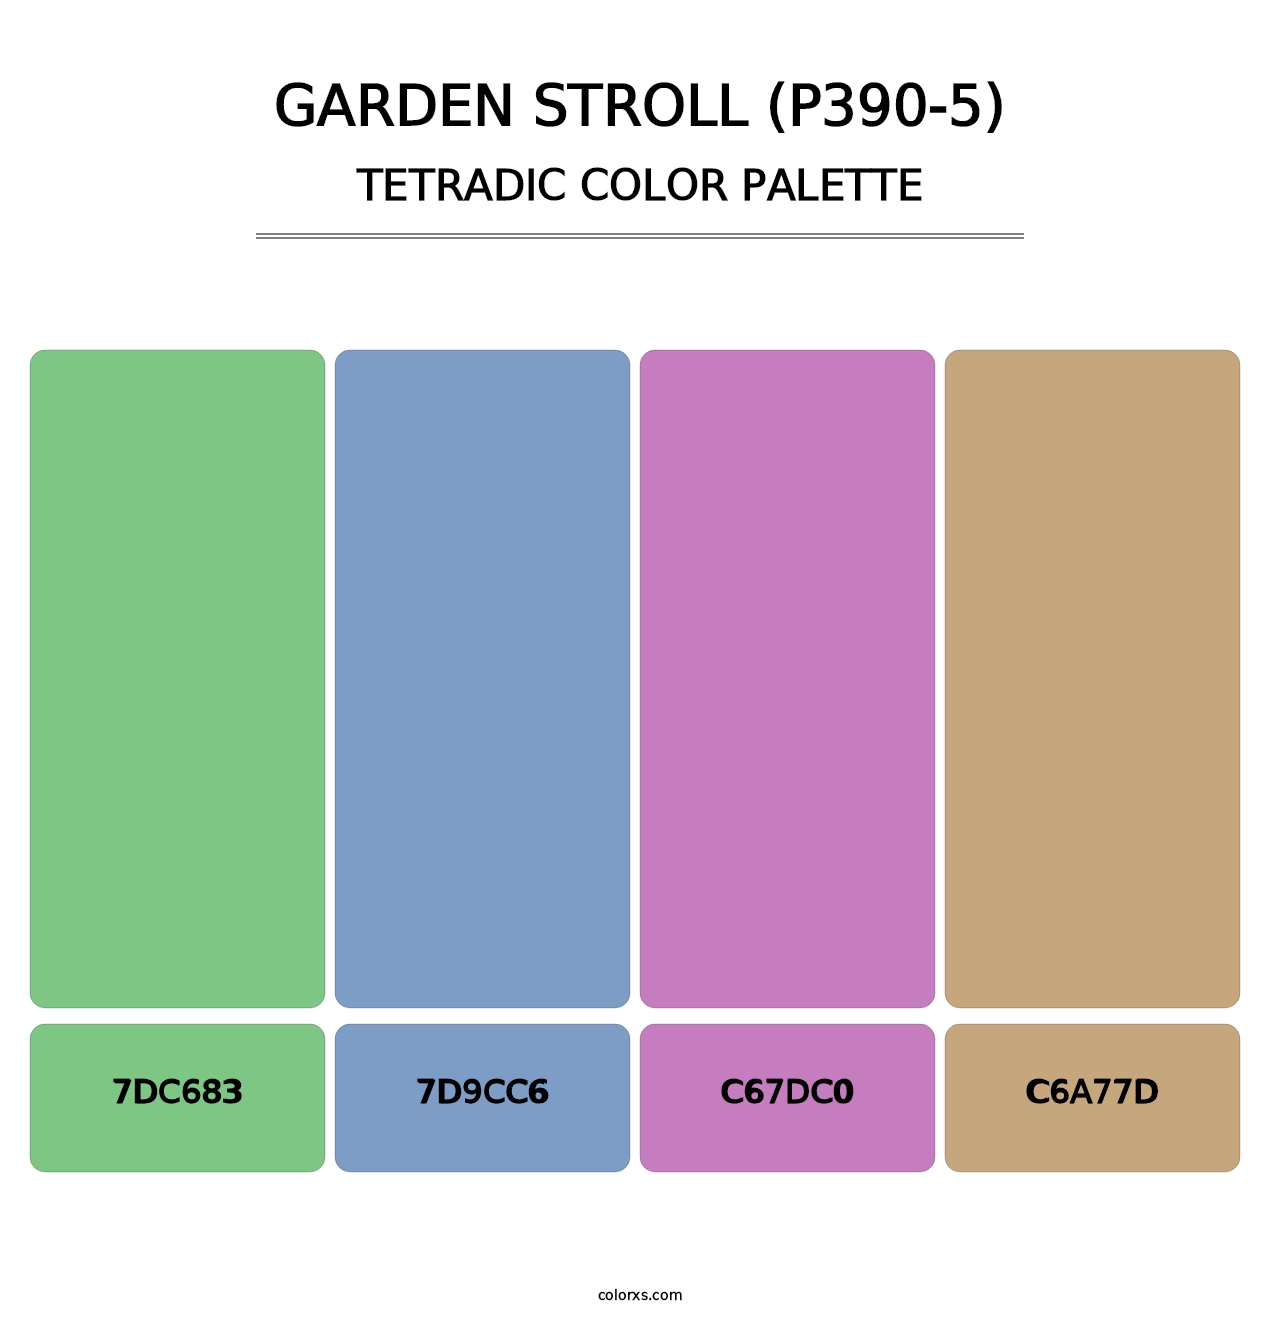 Garden Stroll (P390-5) - Tetradic Color Palette